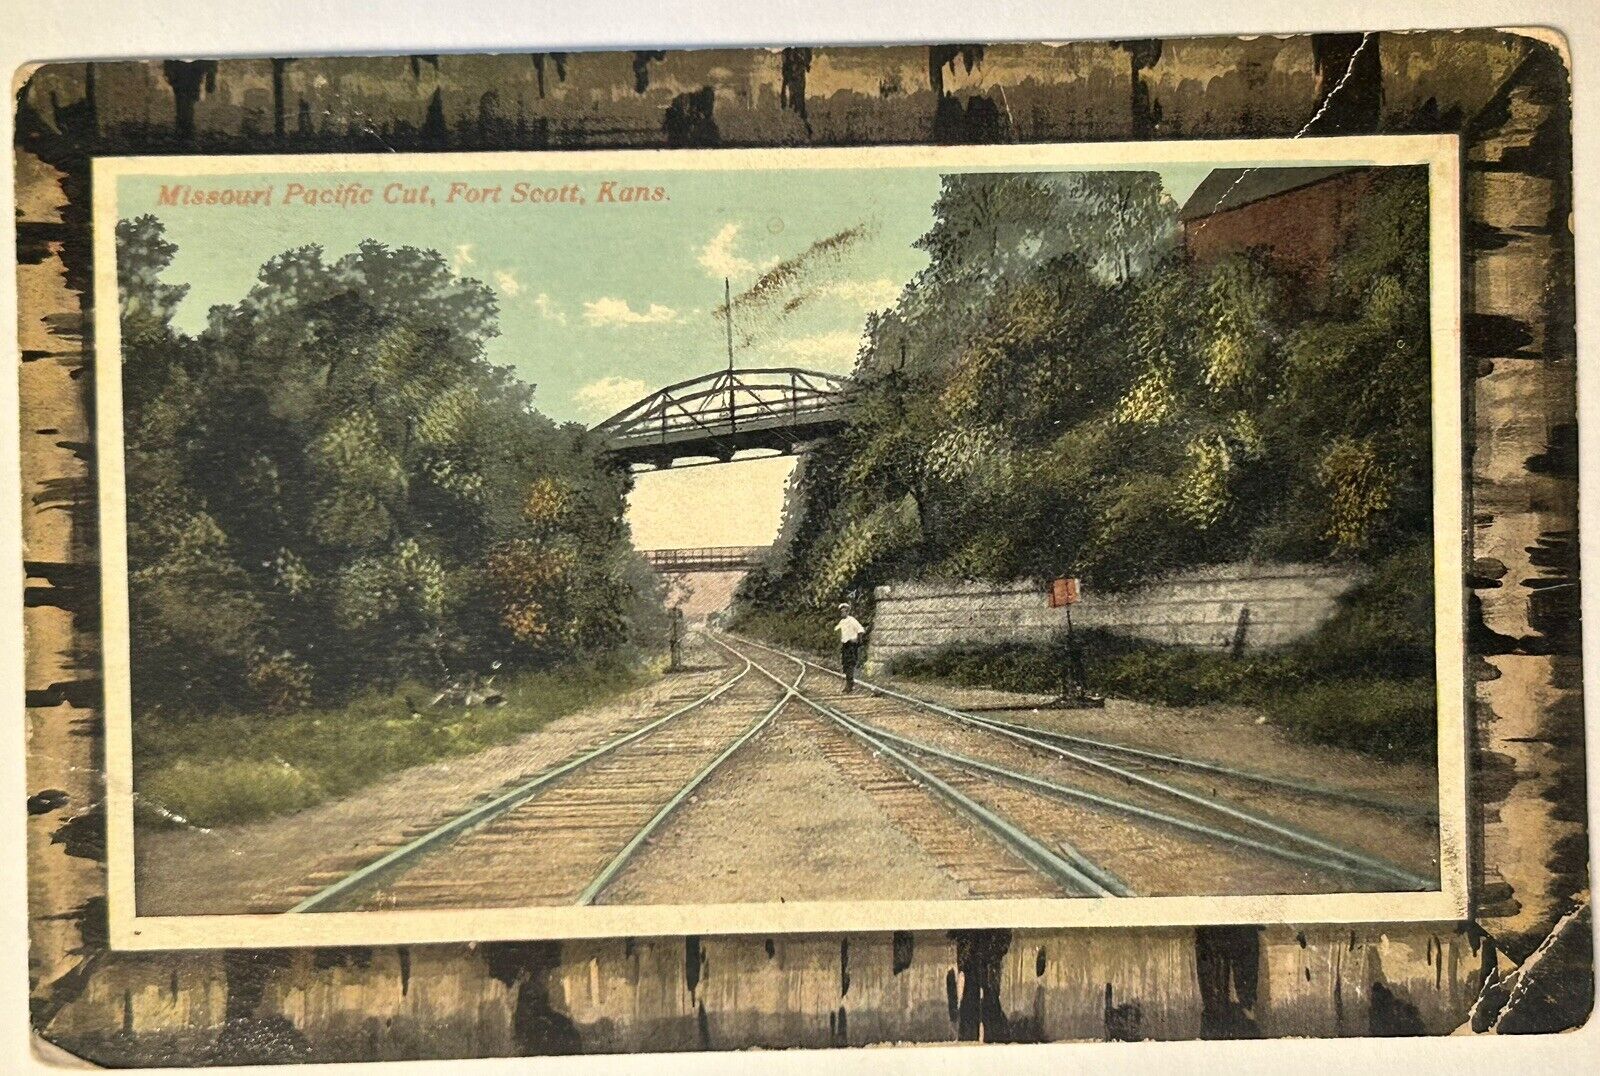 Missouri Pacific Cut, Fort Scott Kansas. 1915 Vintage Postcard. Railway Railroad